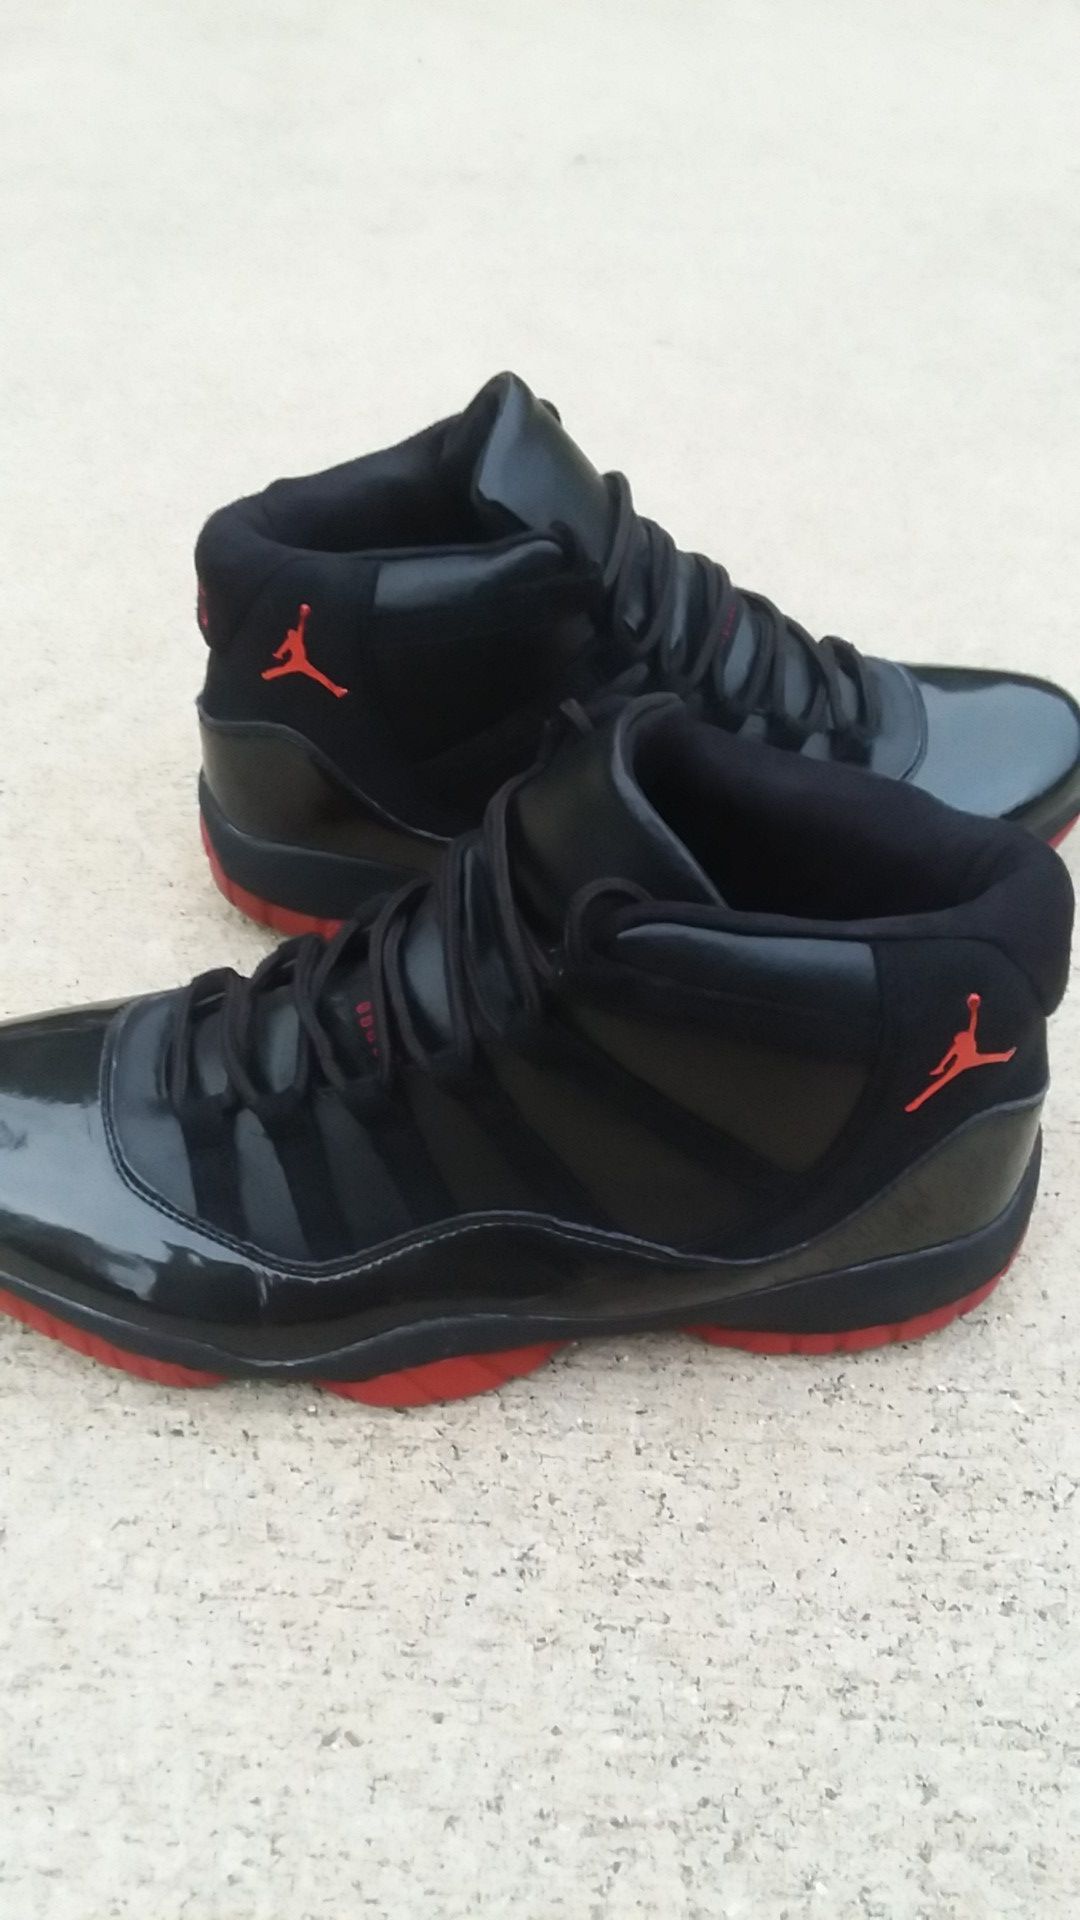 $$$$ Men's Size 13 Air Jordan 11 "dirty breds" $45 OBO $$$